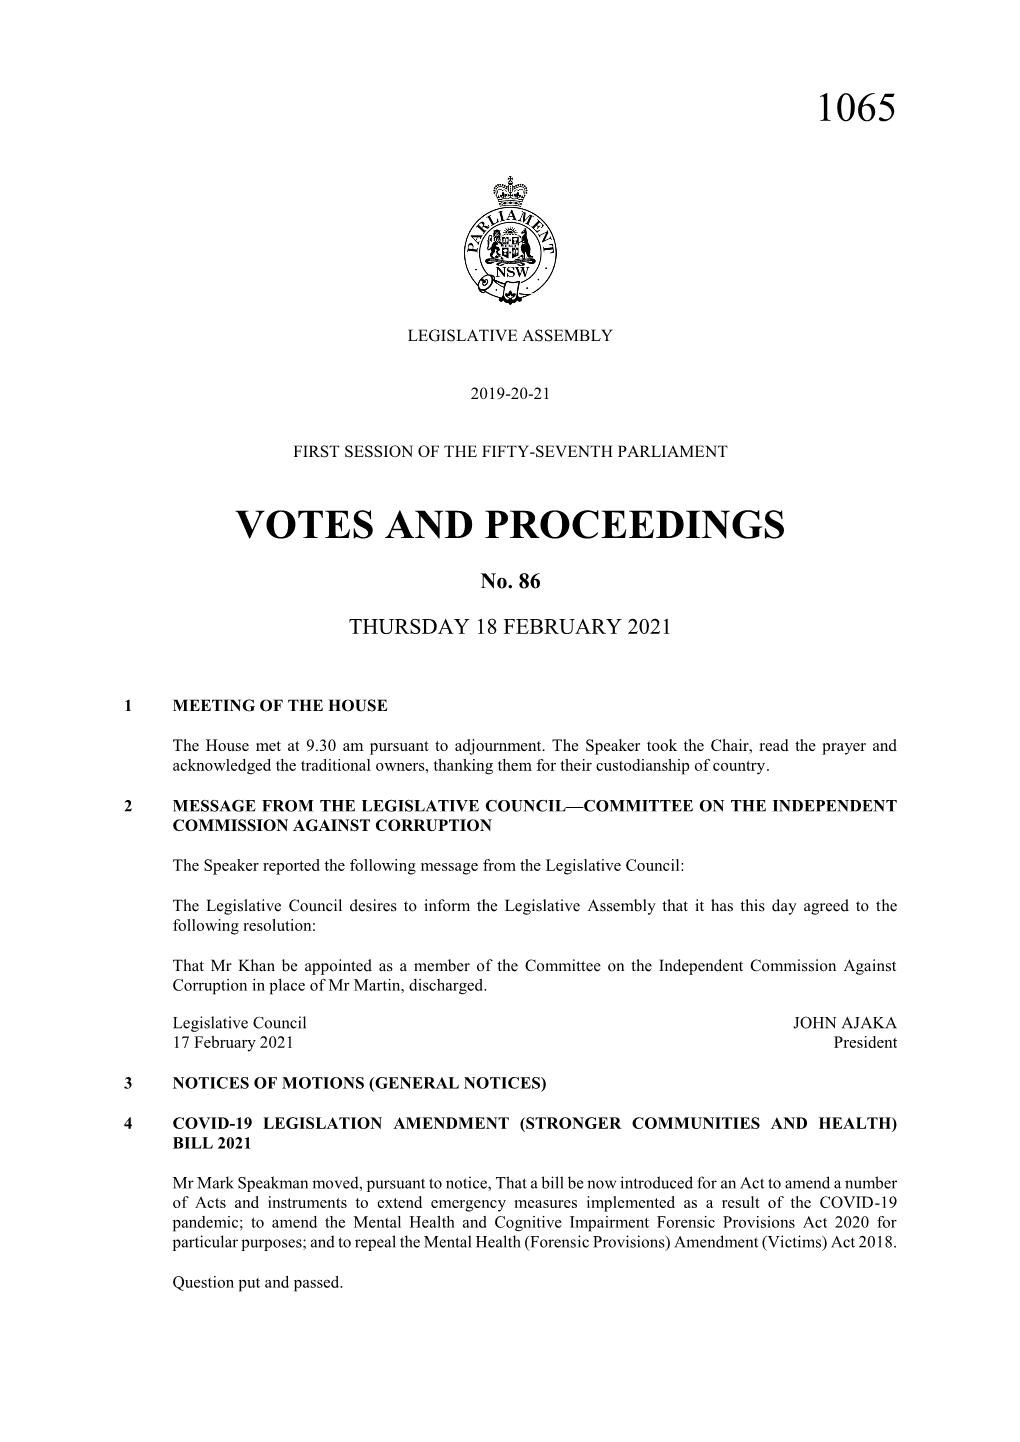 1065 Votes and Proceedings